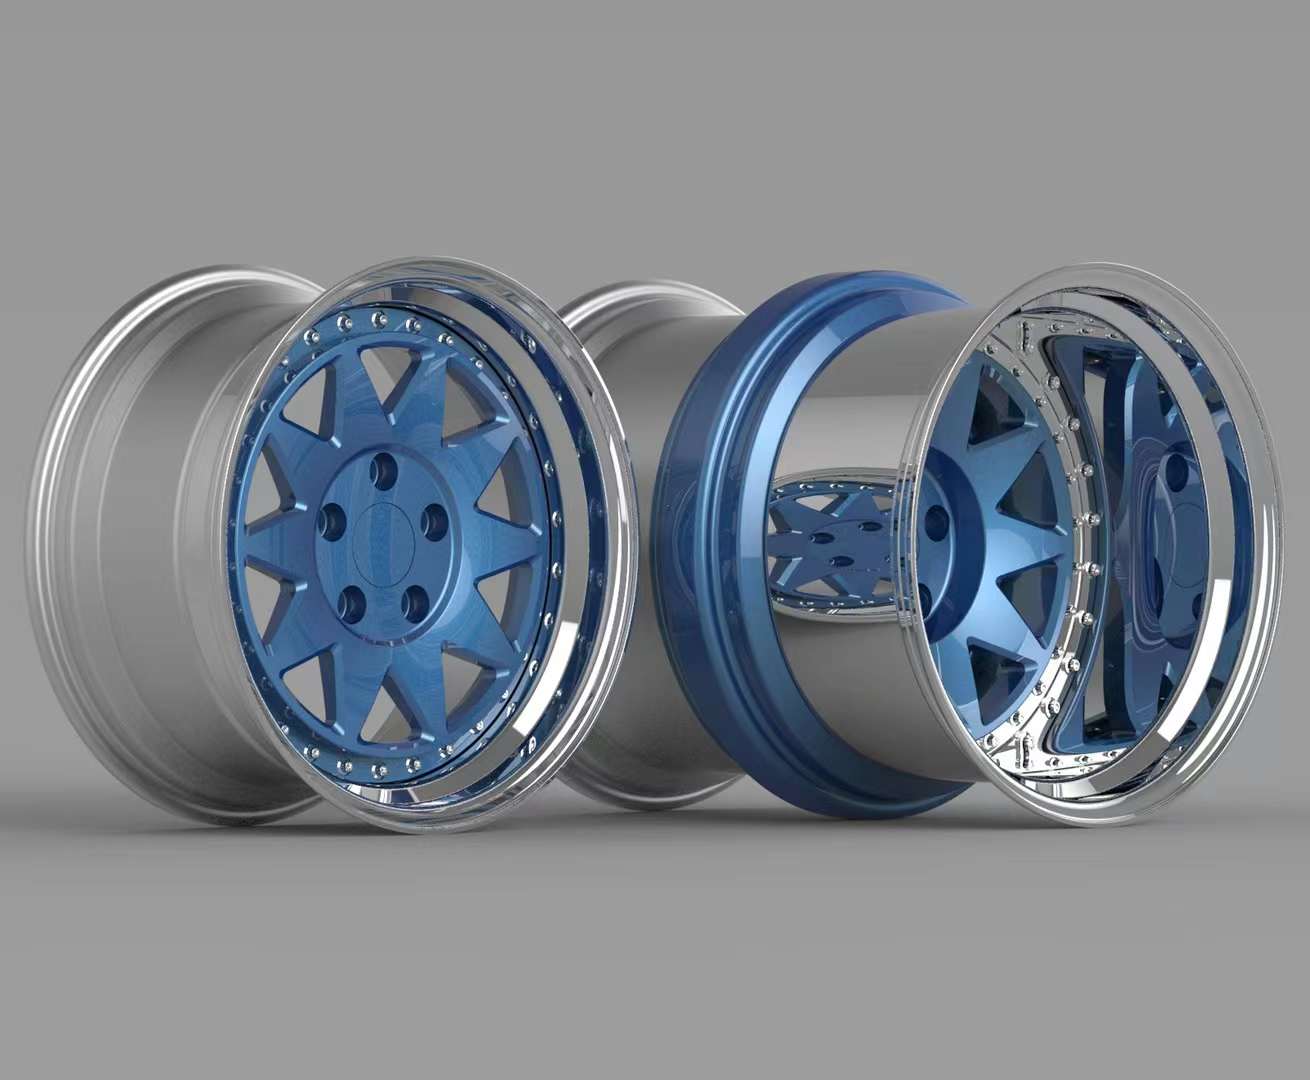 Super Deep Dish 20x20J Rear Wheel Double Tire Exclusive New Design 3-piece wheels